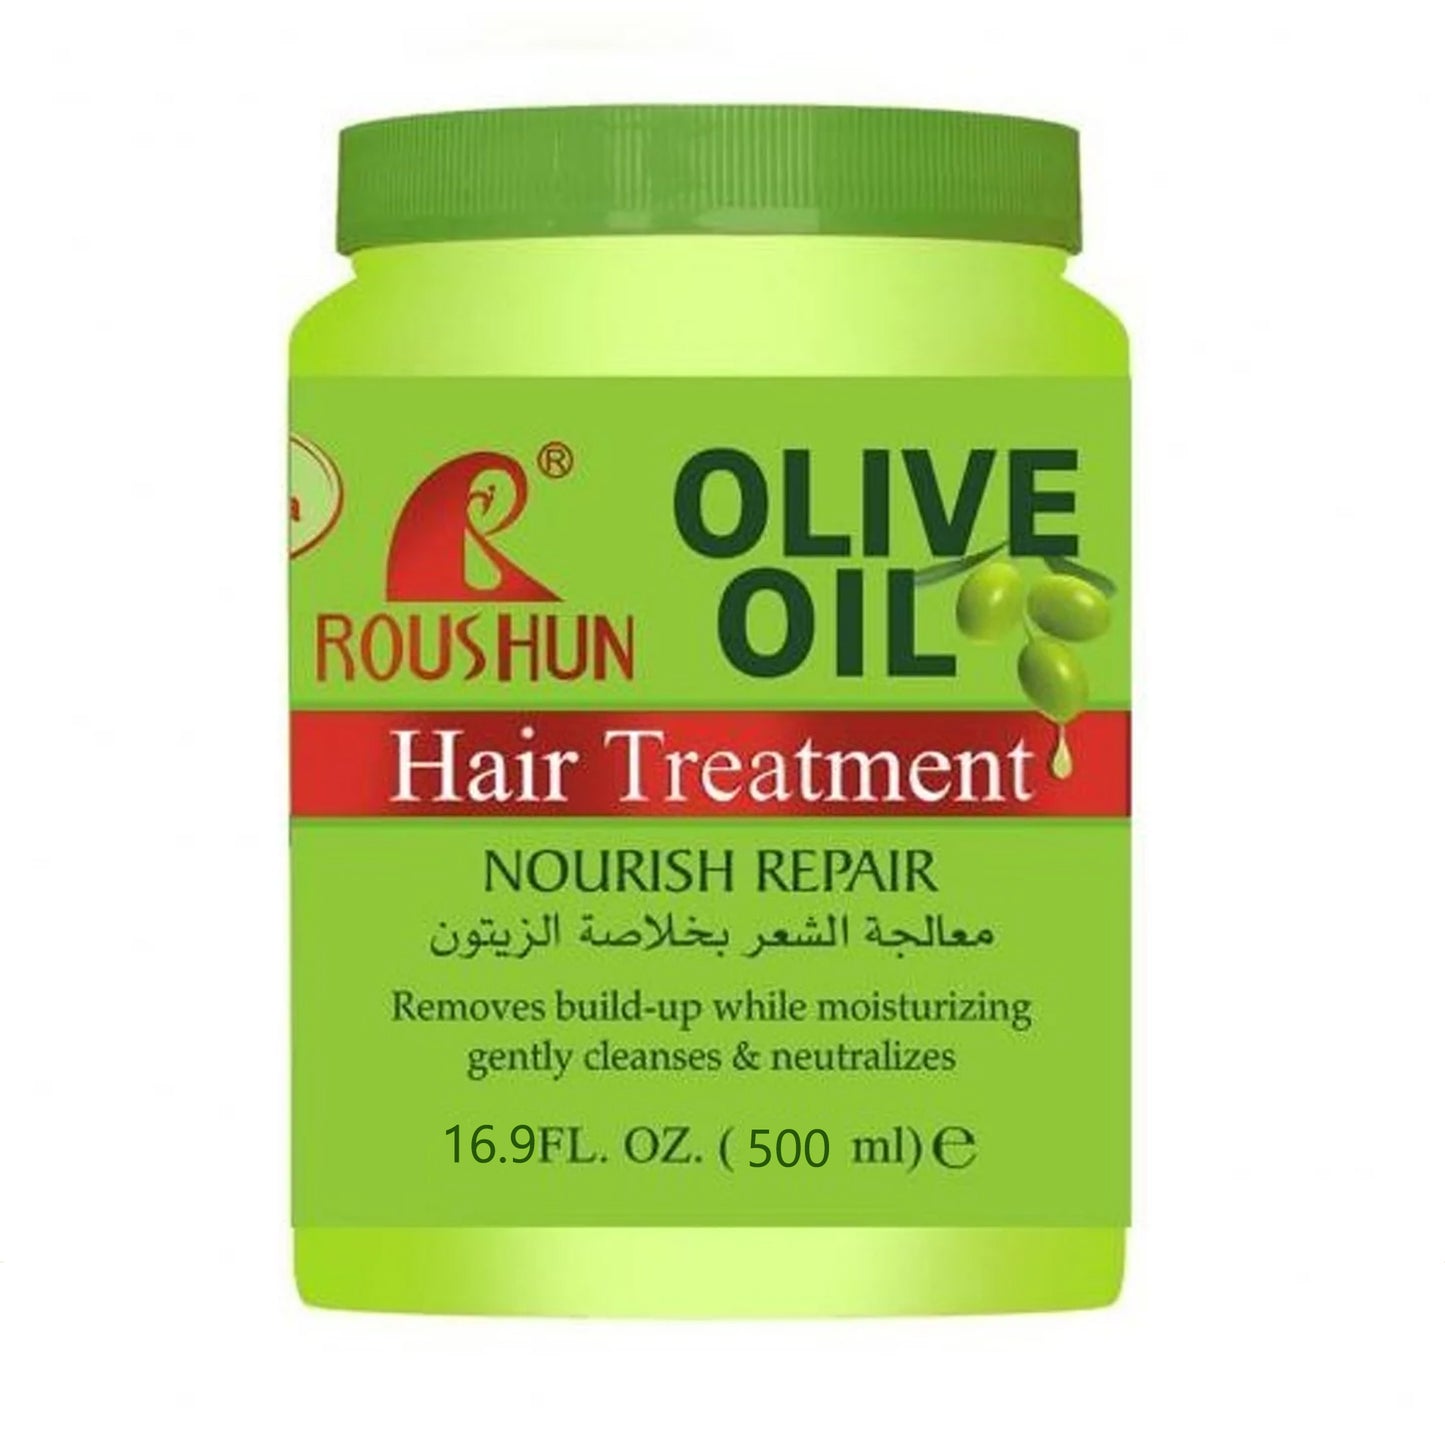 ROUSHUN - OLIVE OIL NOURISH REPAIR HAIR TREATMENT - 500ML